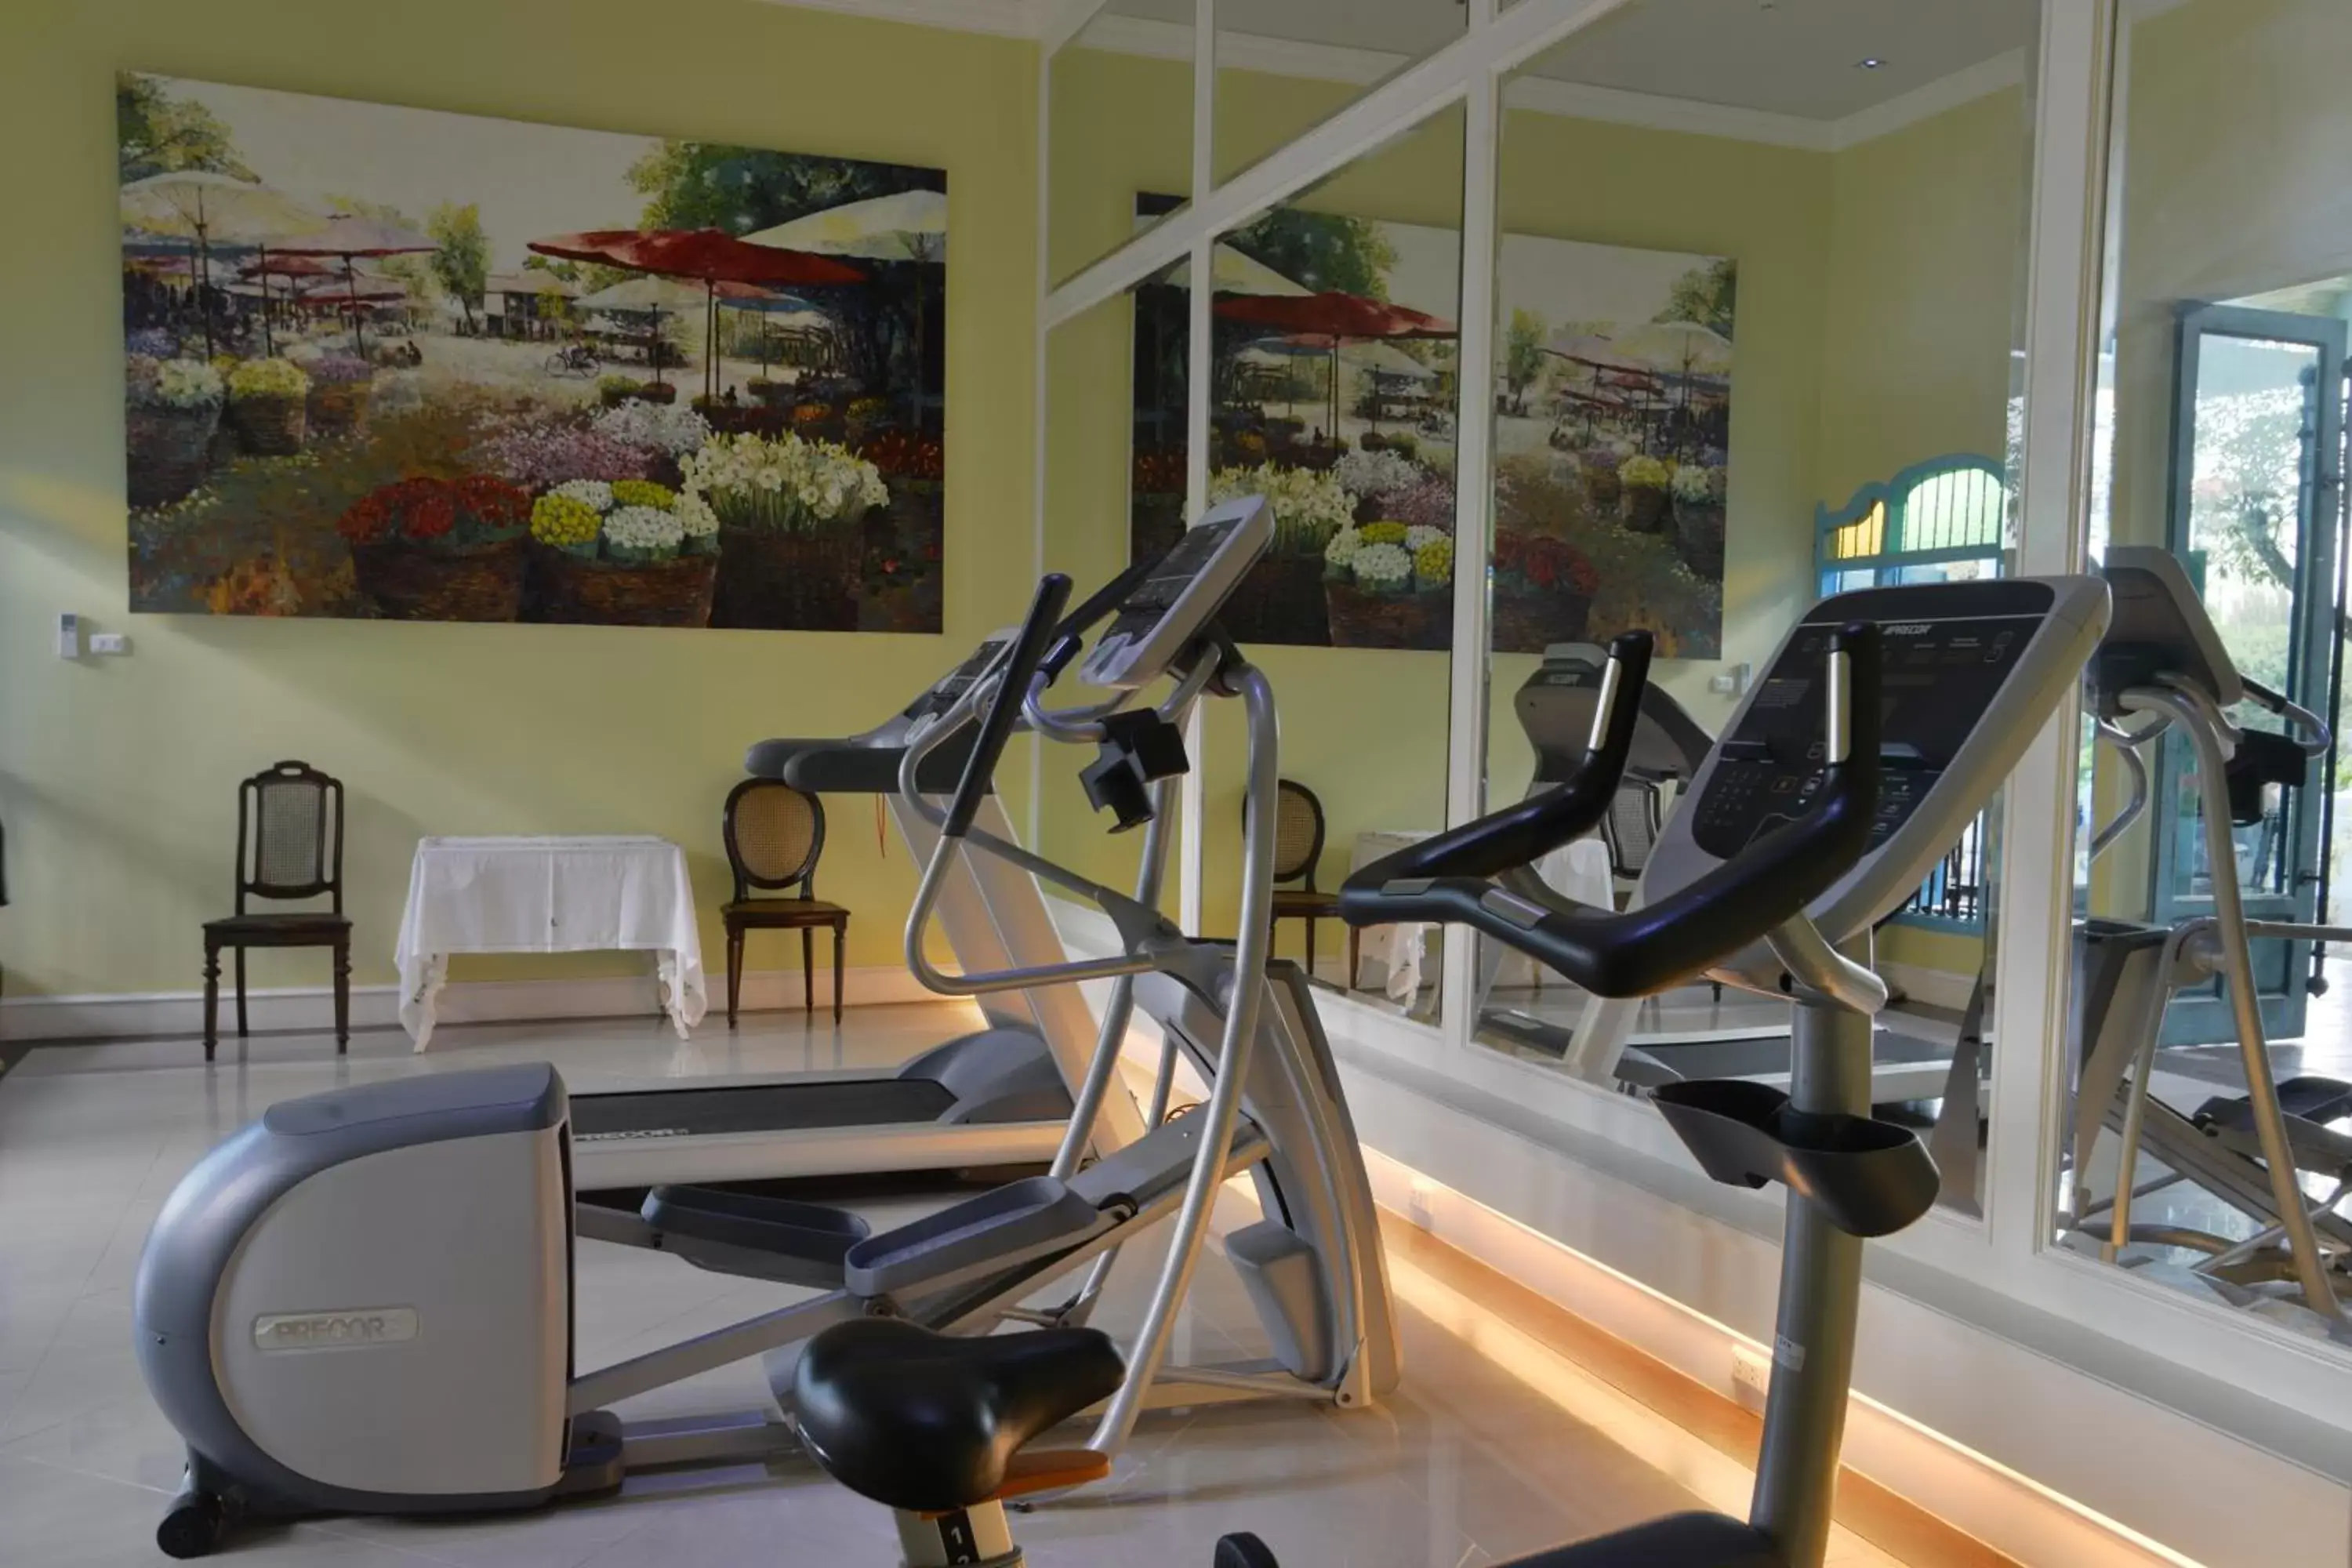 Fitness centre/facilities, Fitness Center/Facilities in At Pingnakorn Huaykaew